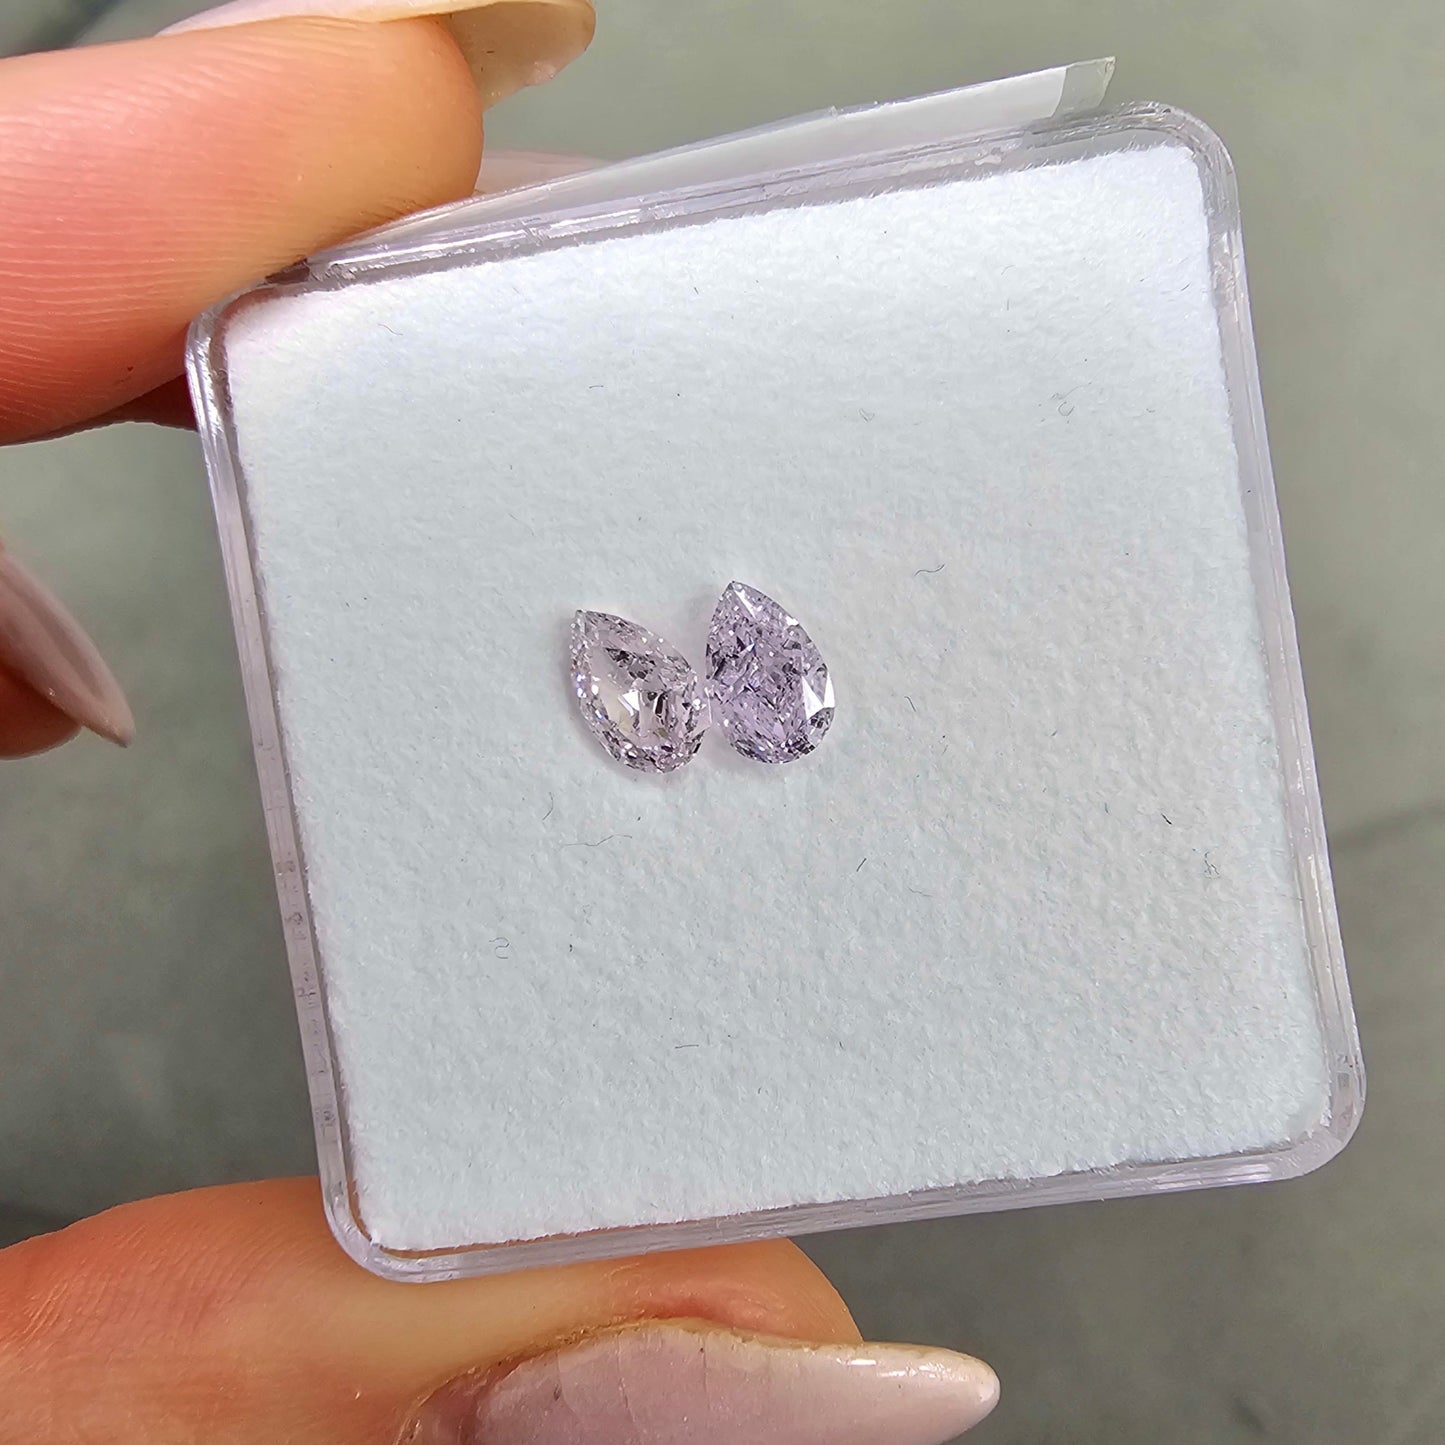 0.50 & 0.51 Carat Fancy Light Pinkish Purple Diamonds GIA Certified Diamonds SI1 Clarity Very Good + Good Cutting No Fluorescence